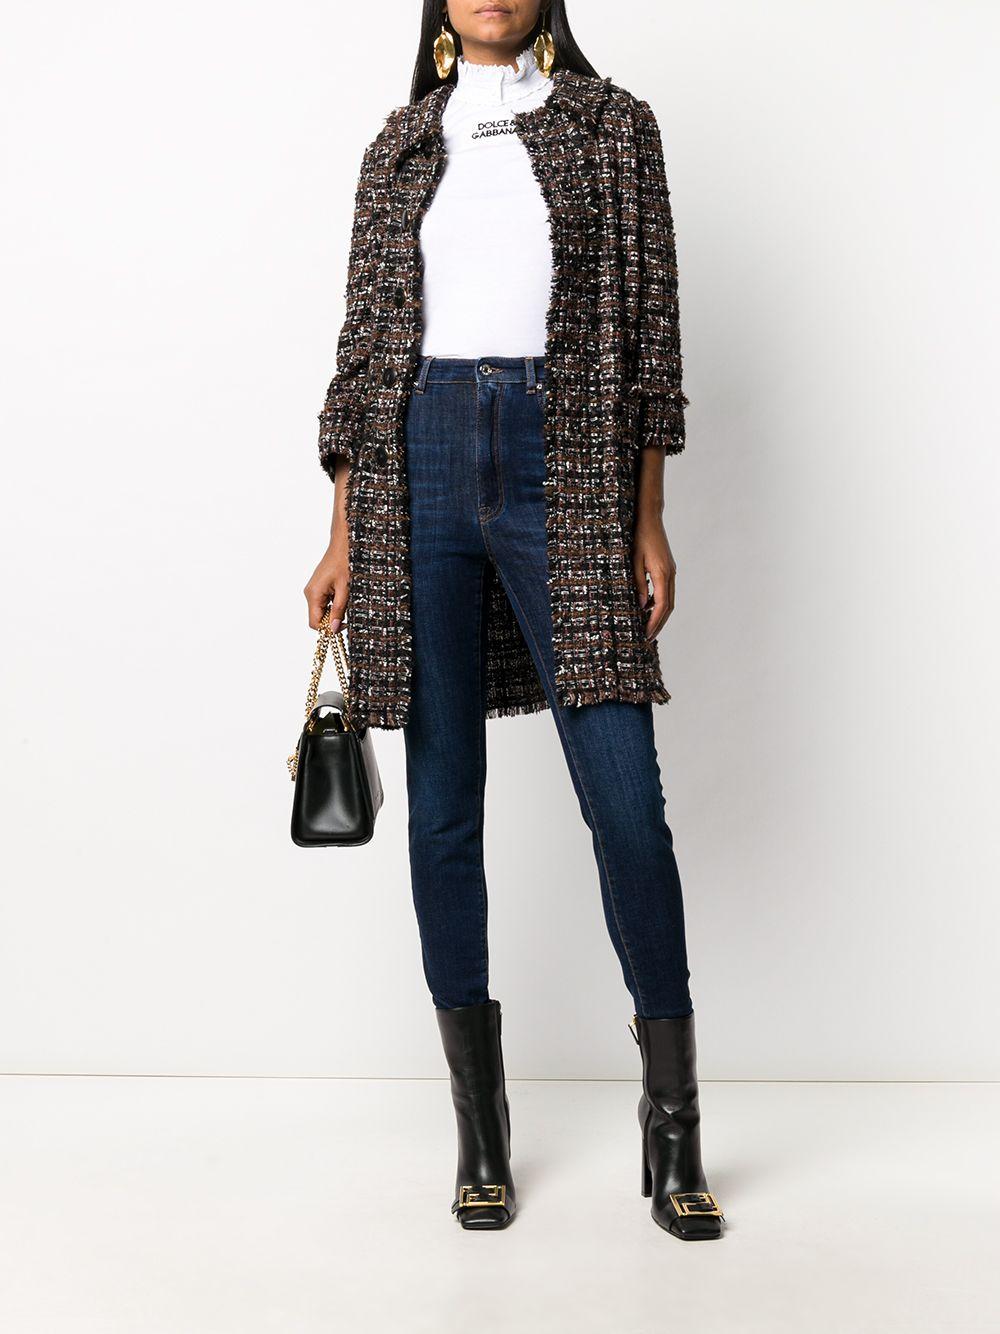 Dolce & Gabbana Tweed Mid-length Coat in Brown - Lyst